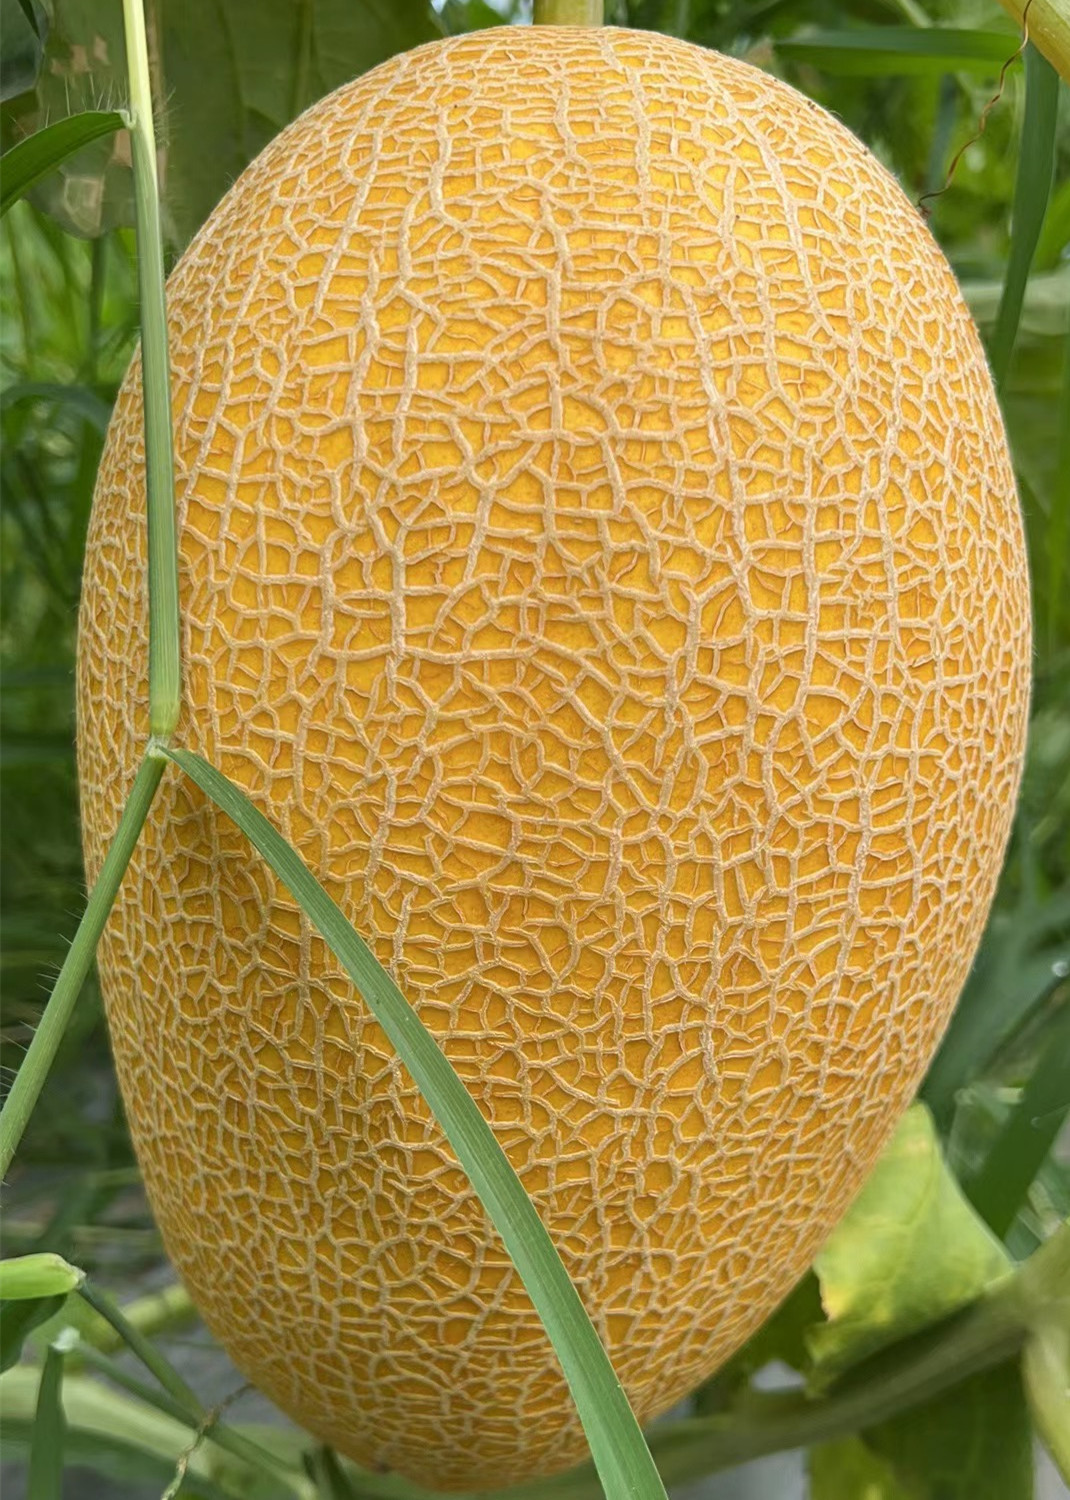 New Breeding Hybrid F1 Yellow Peel Oval Sweet Melon Seeds for Growing-Golden Net No. 9